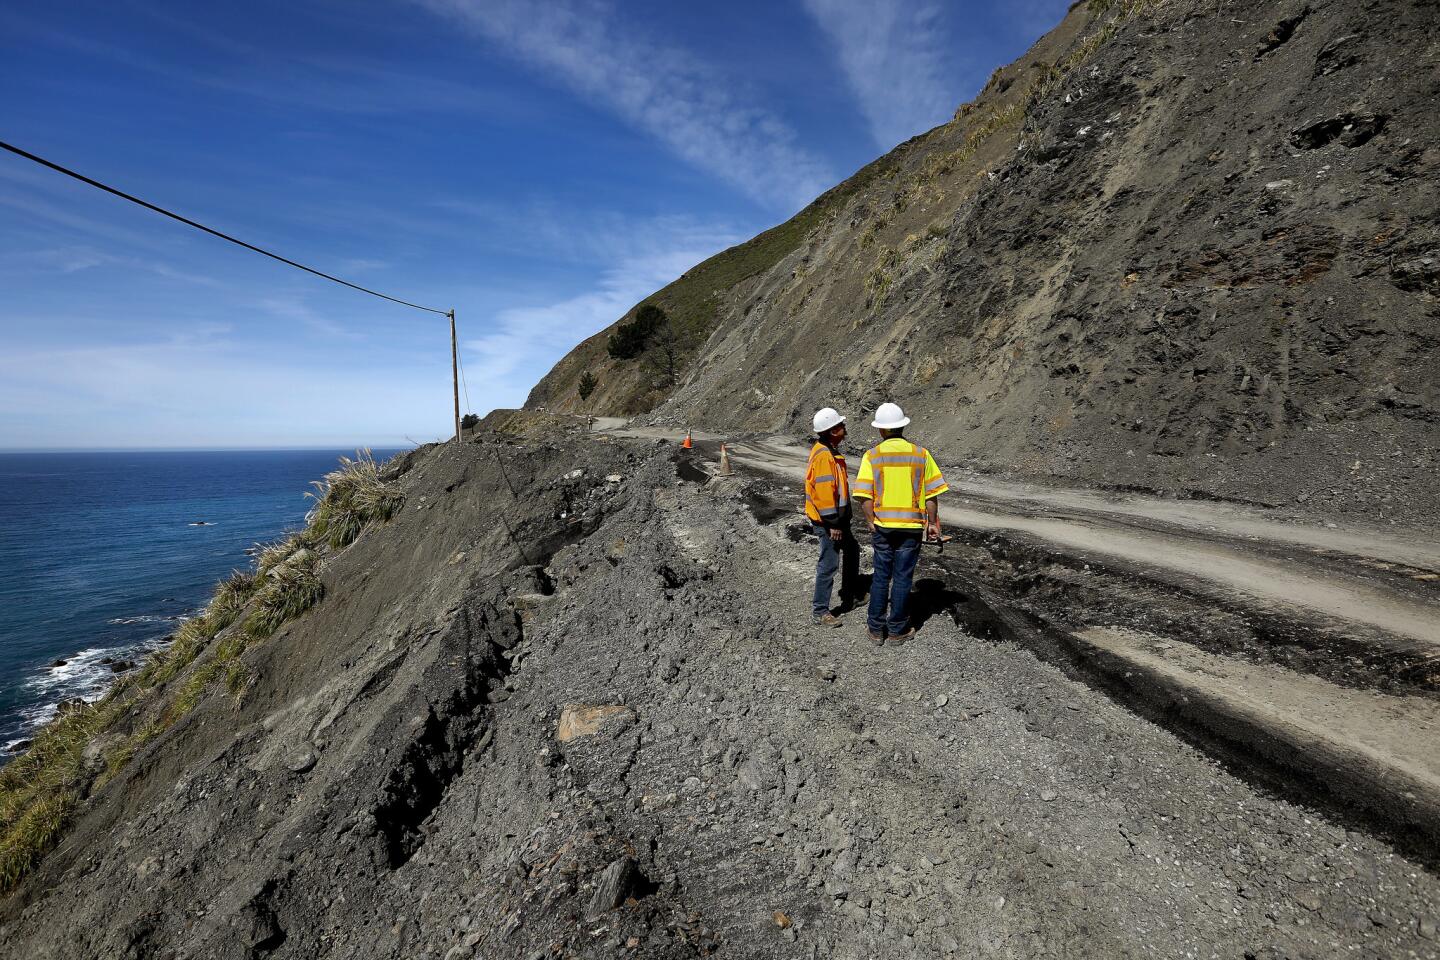 Highway closure isolates Big Sur